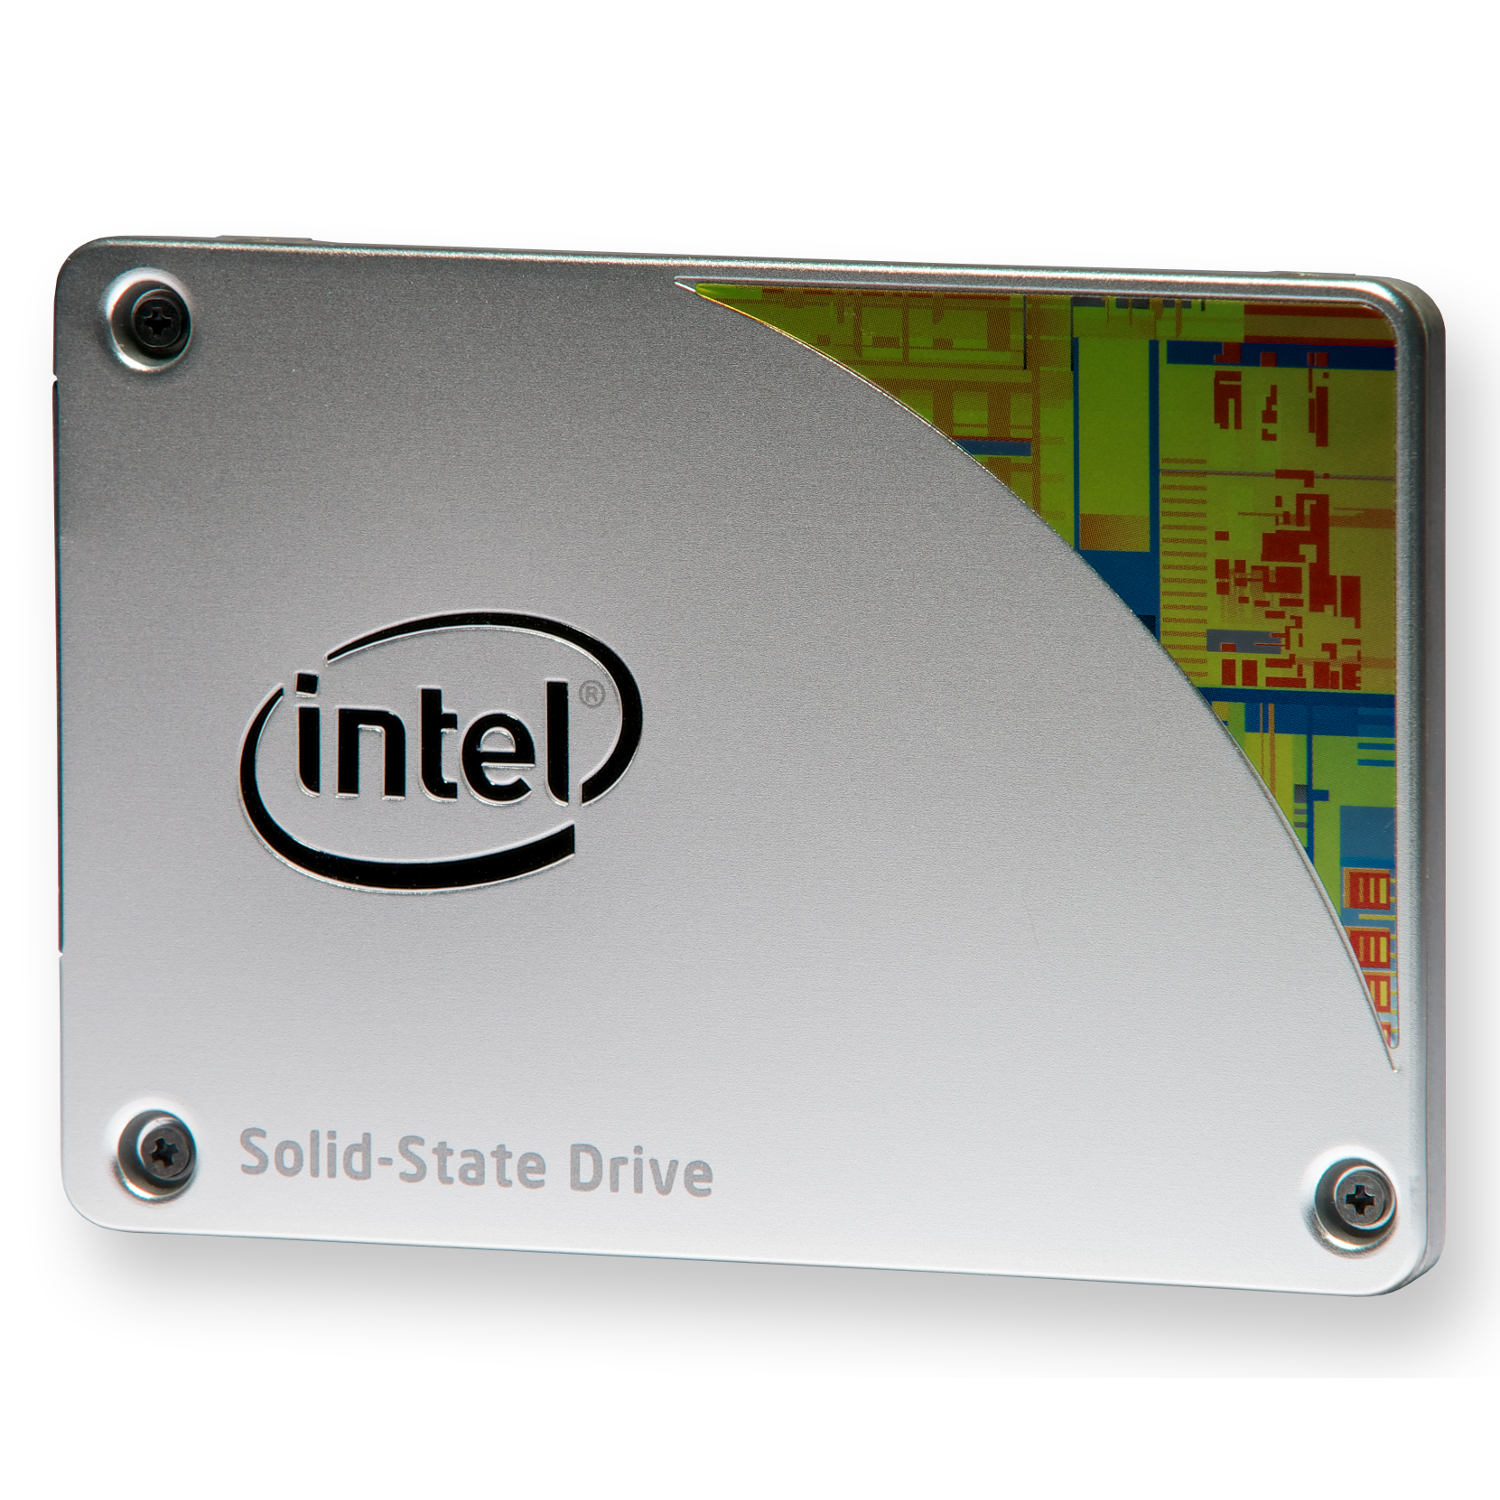 Intel Solid-State Drive 535 Series 240 Go - Disque SSD Intel sur LDLC.com